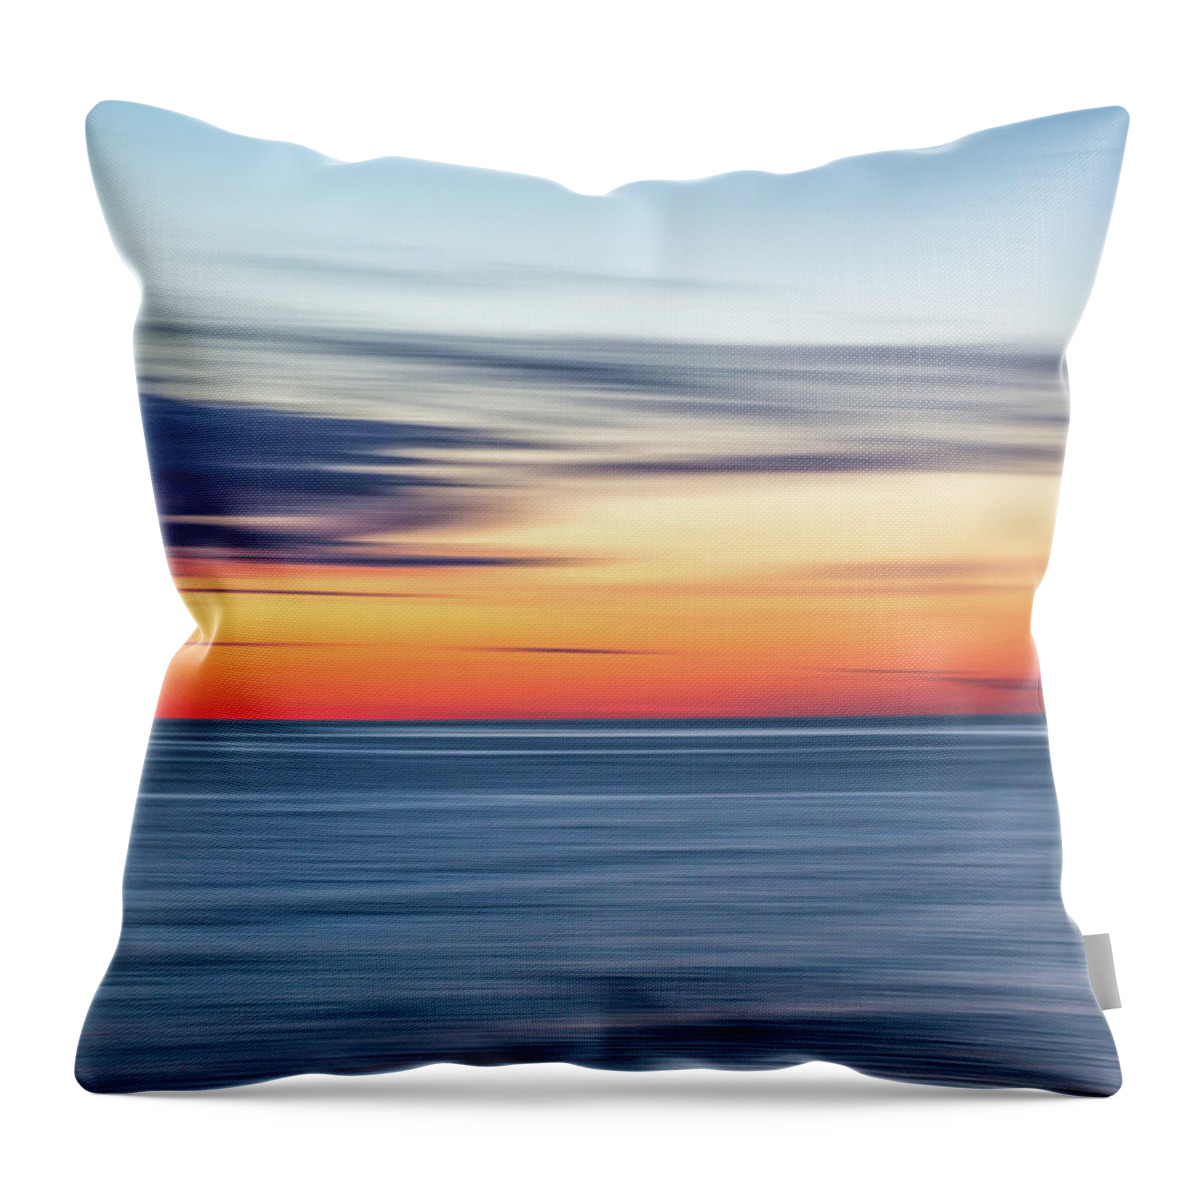 Egypt Beach Throw Pillow featuring the photograph Bold Sunset Egypt Beach by Ann-Marie Rollo